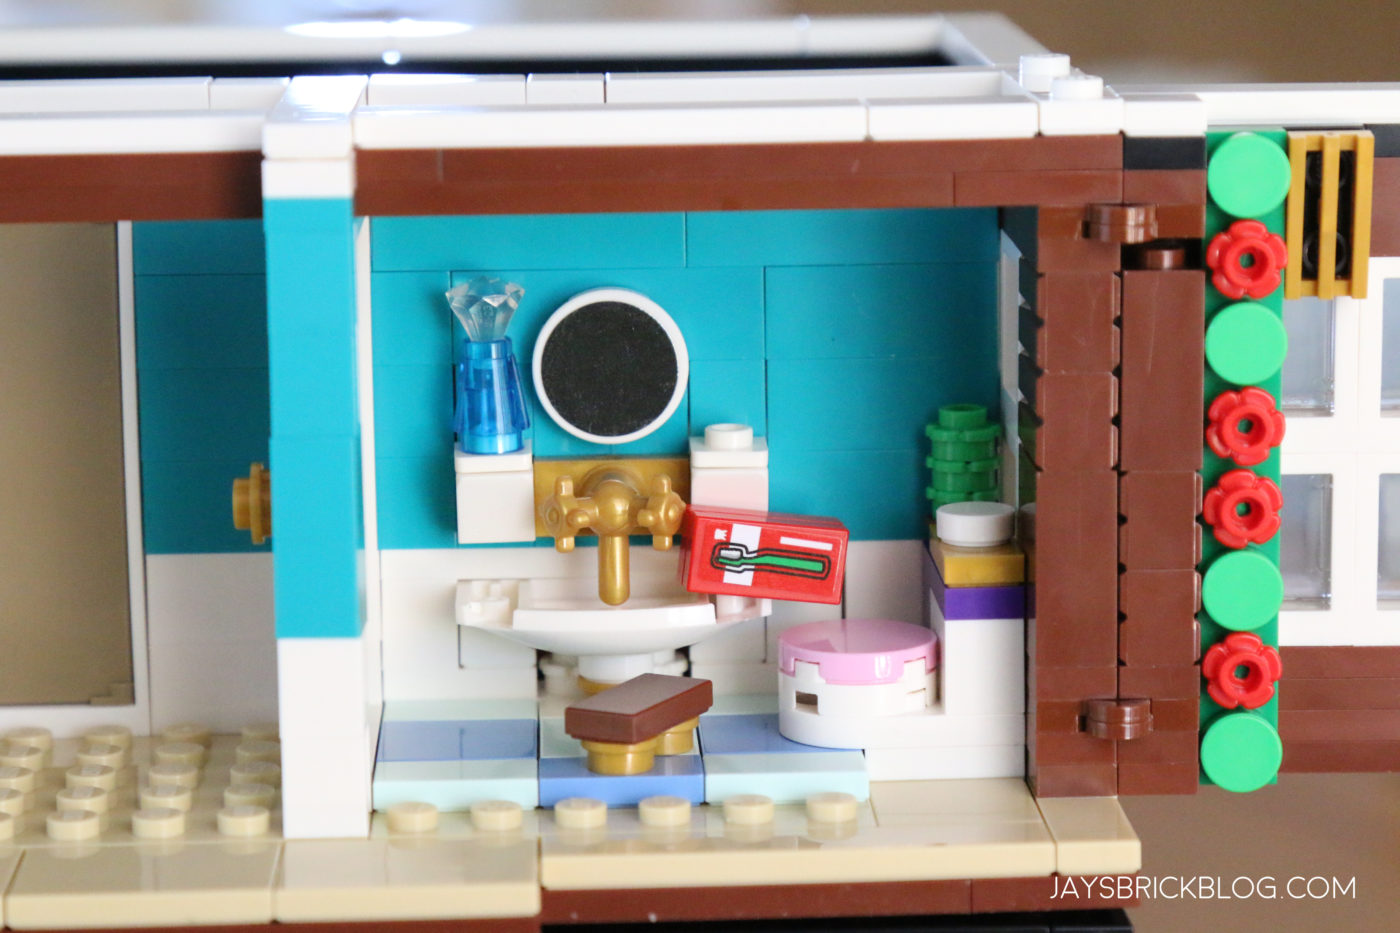 LEGO 21330 Home Alone Bathroom